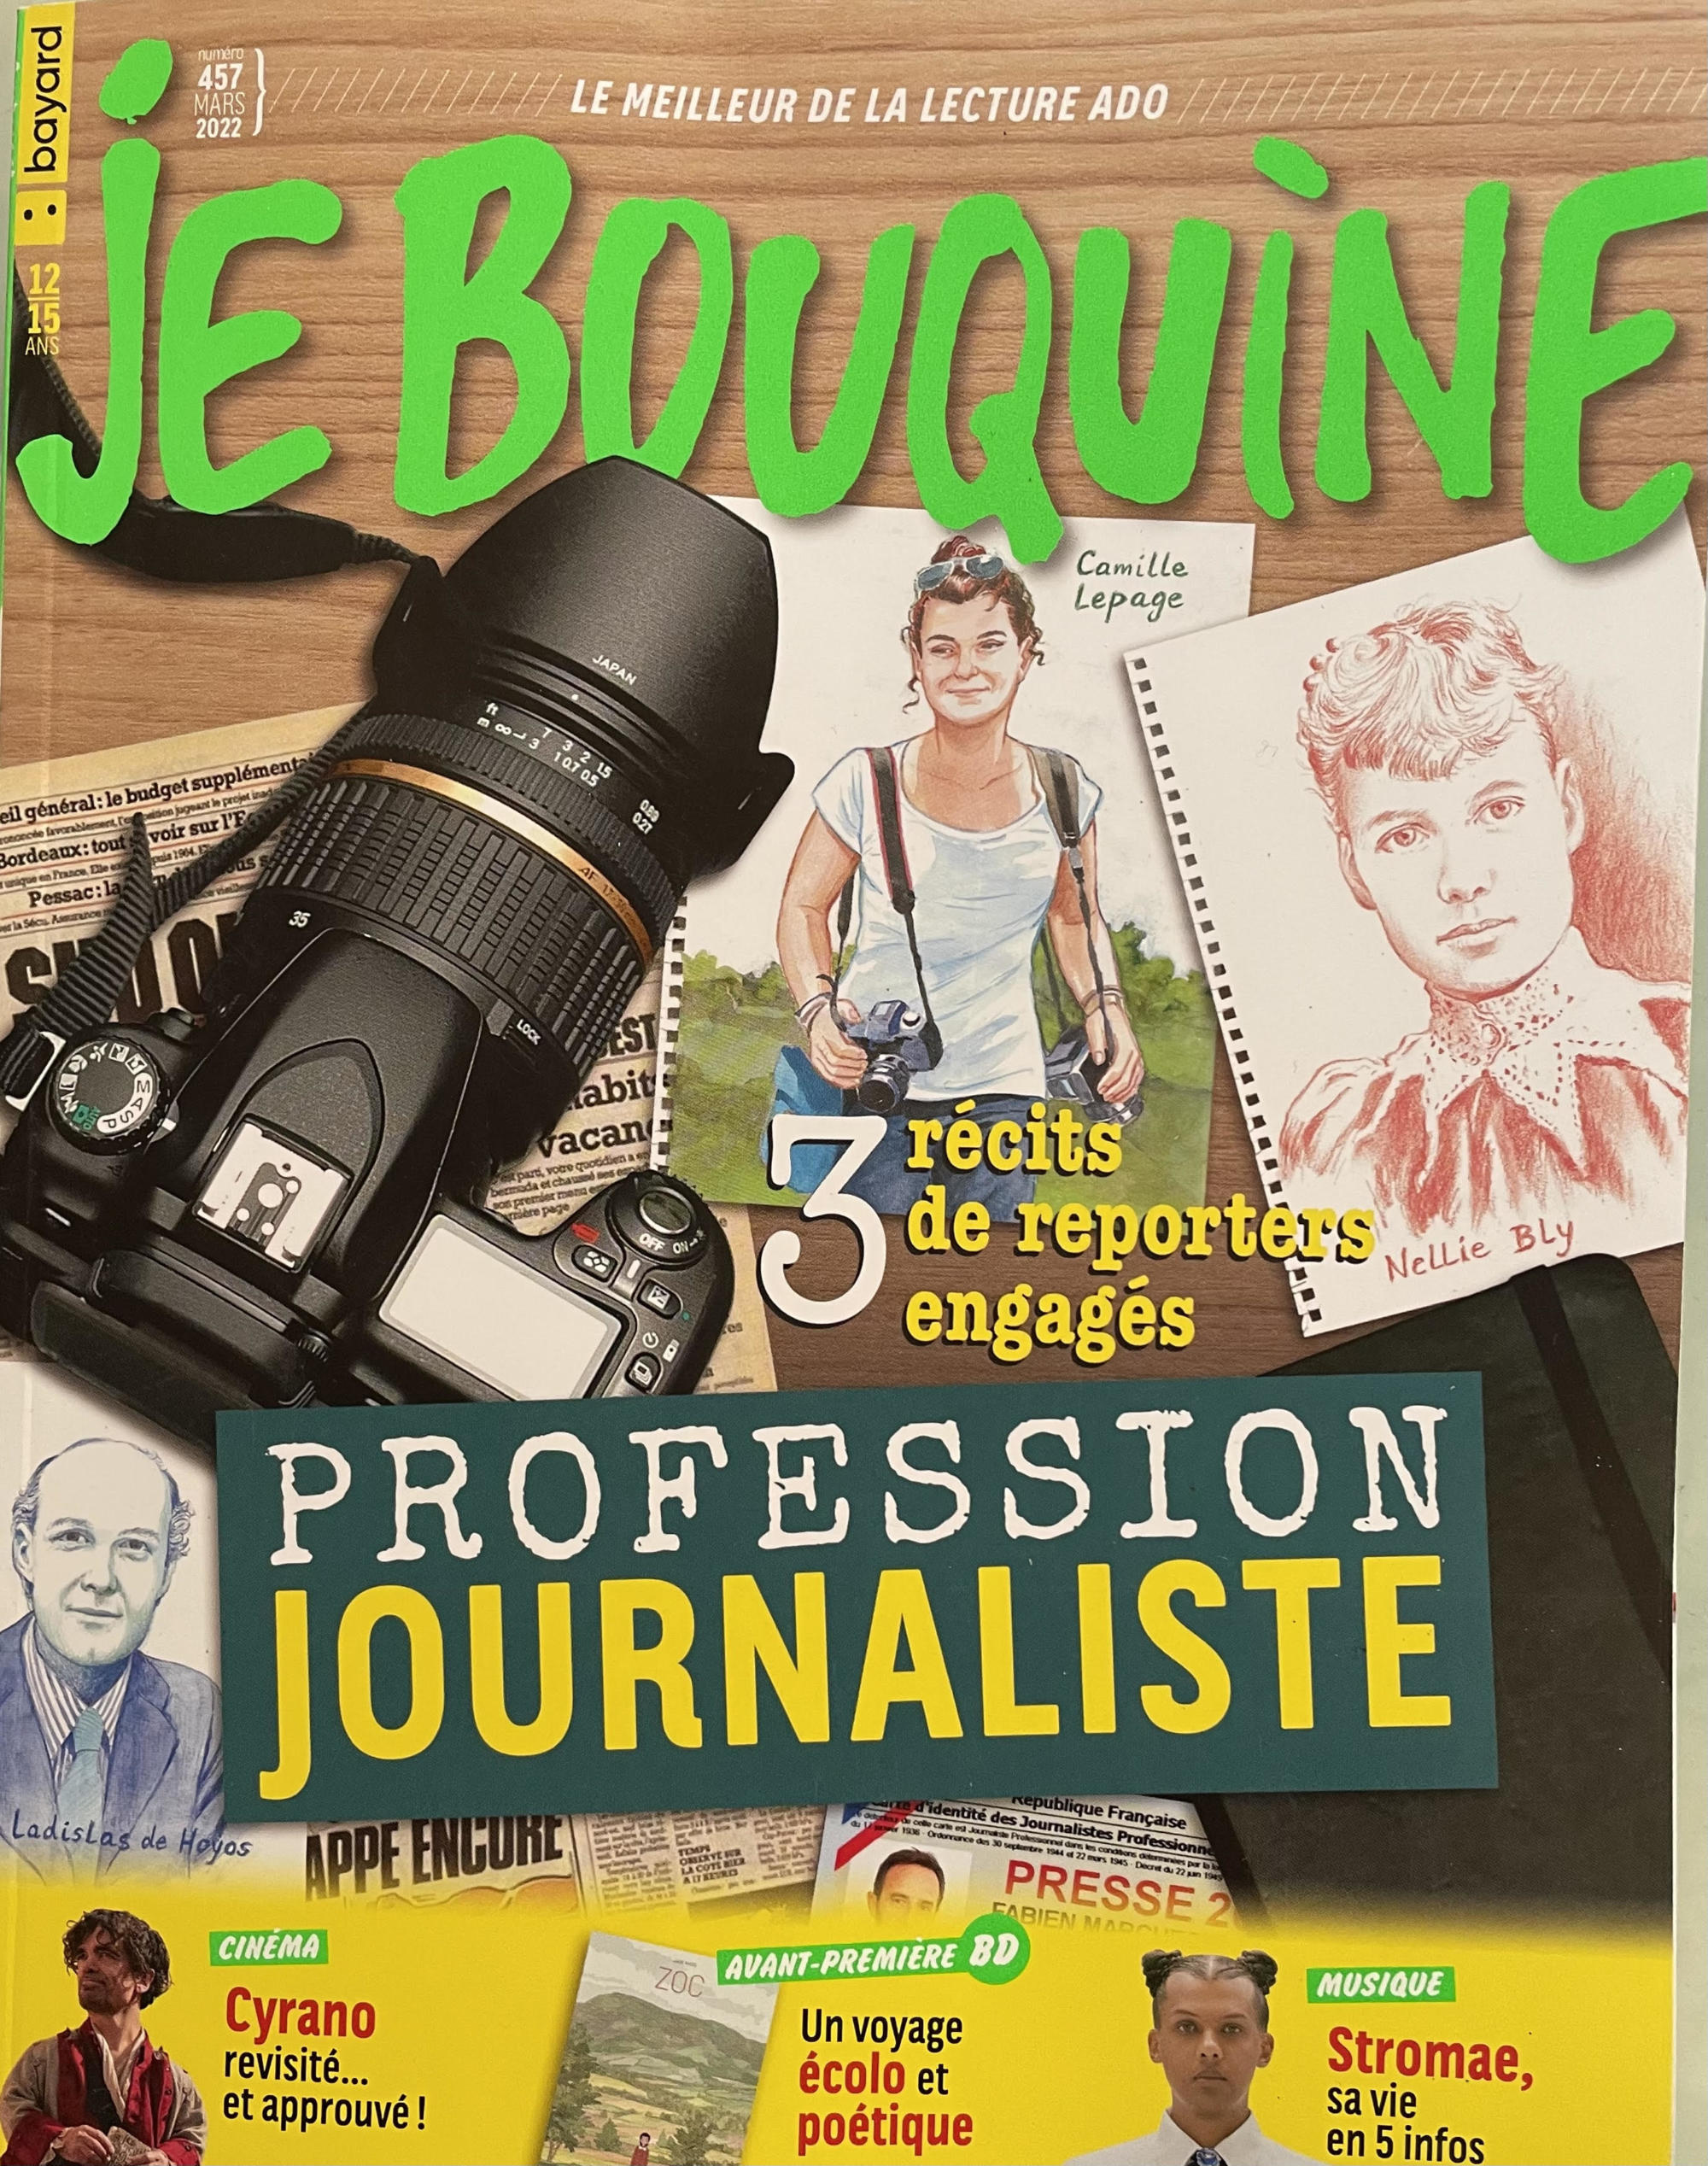 “Je bouquine” magazine dedicated to teenagers